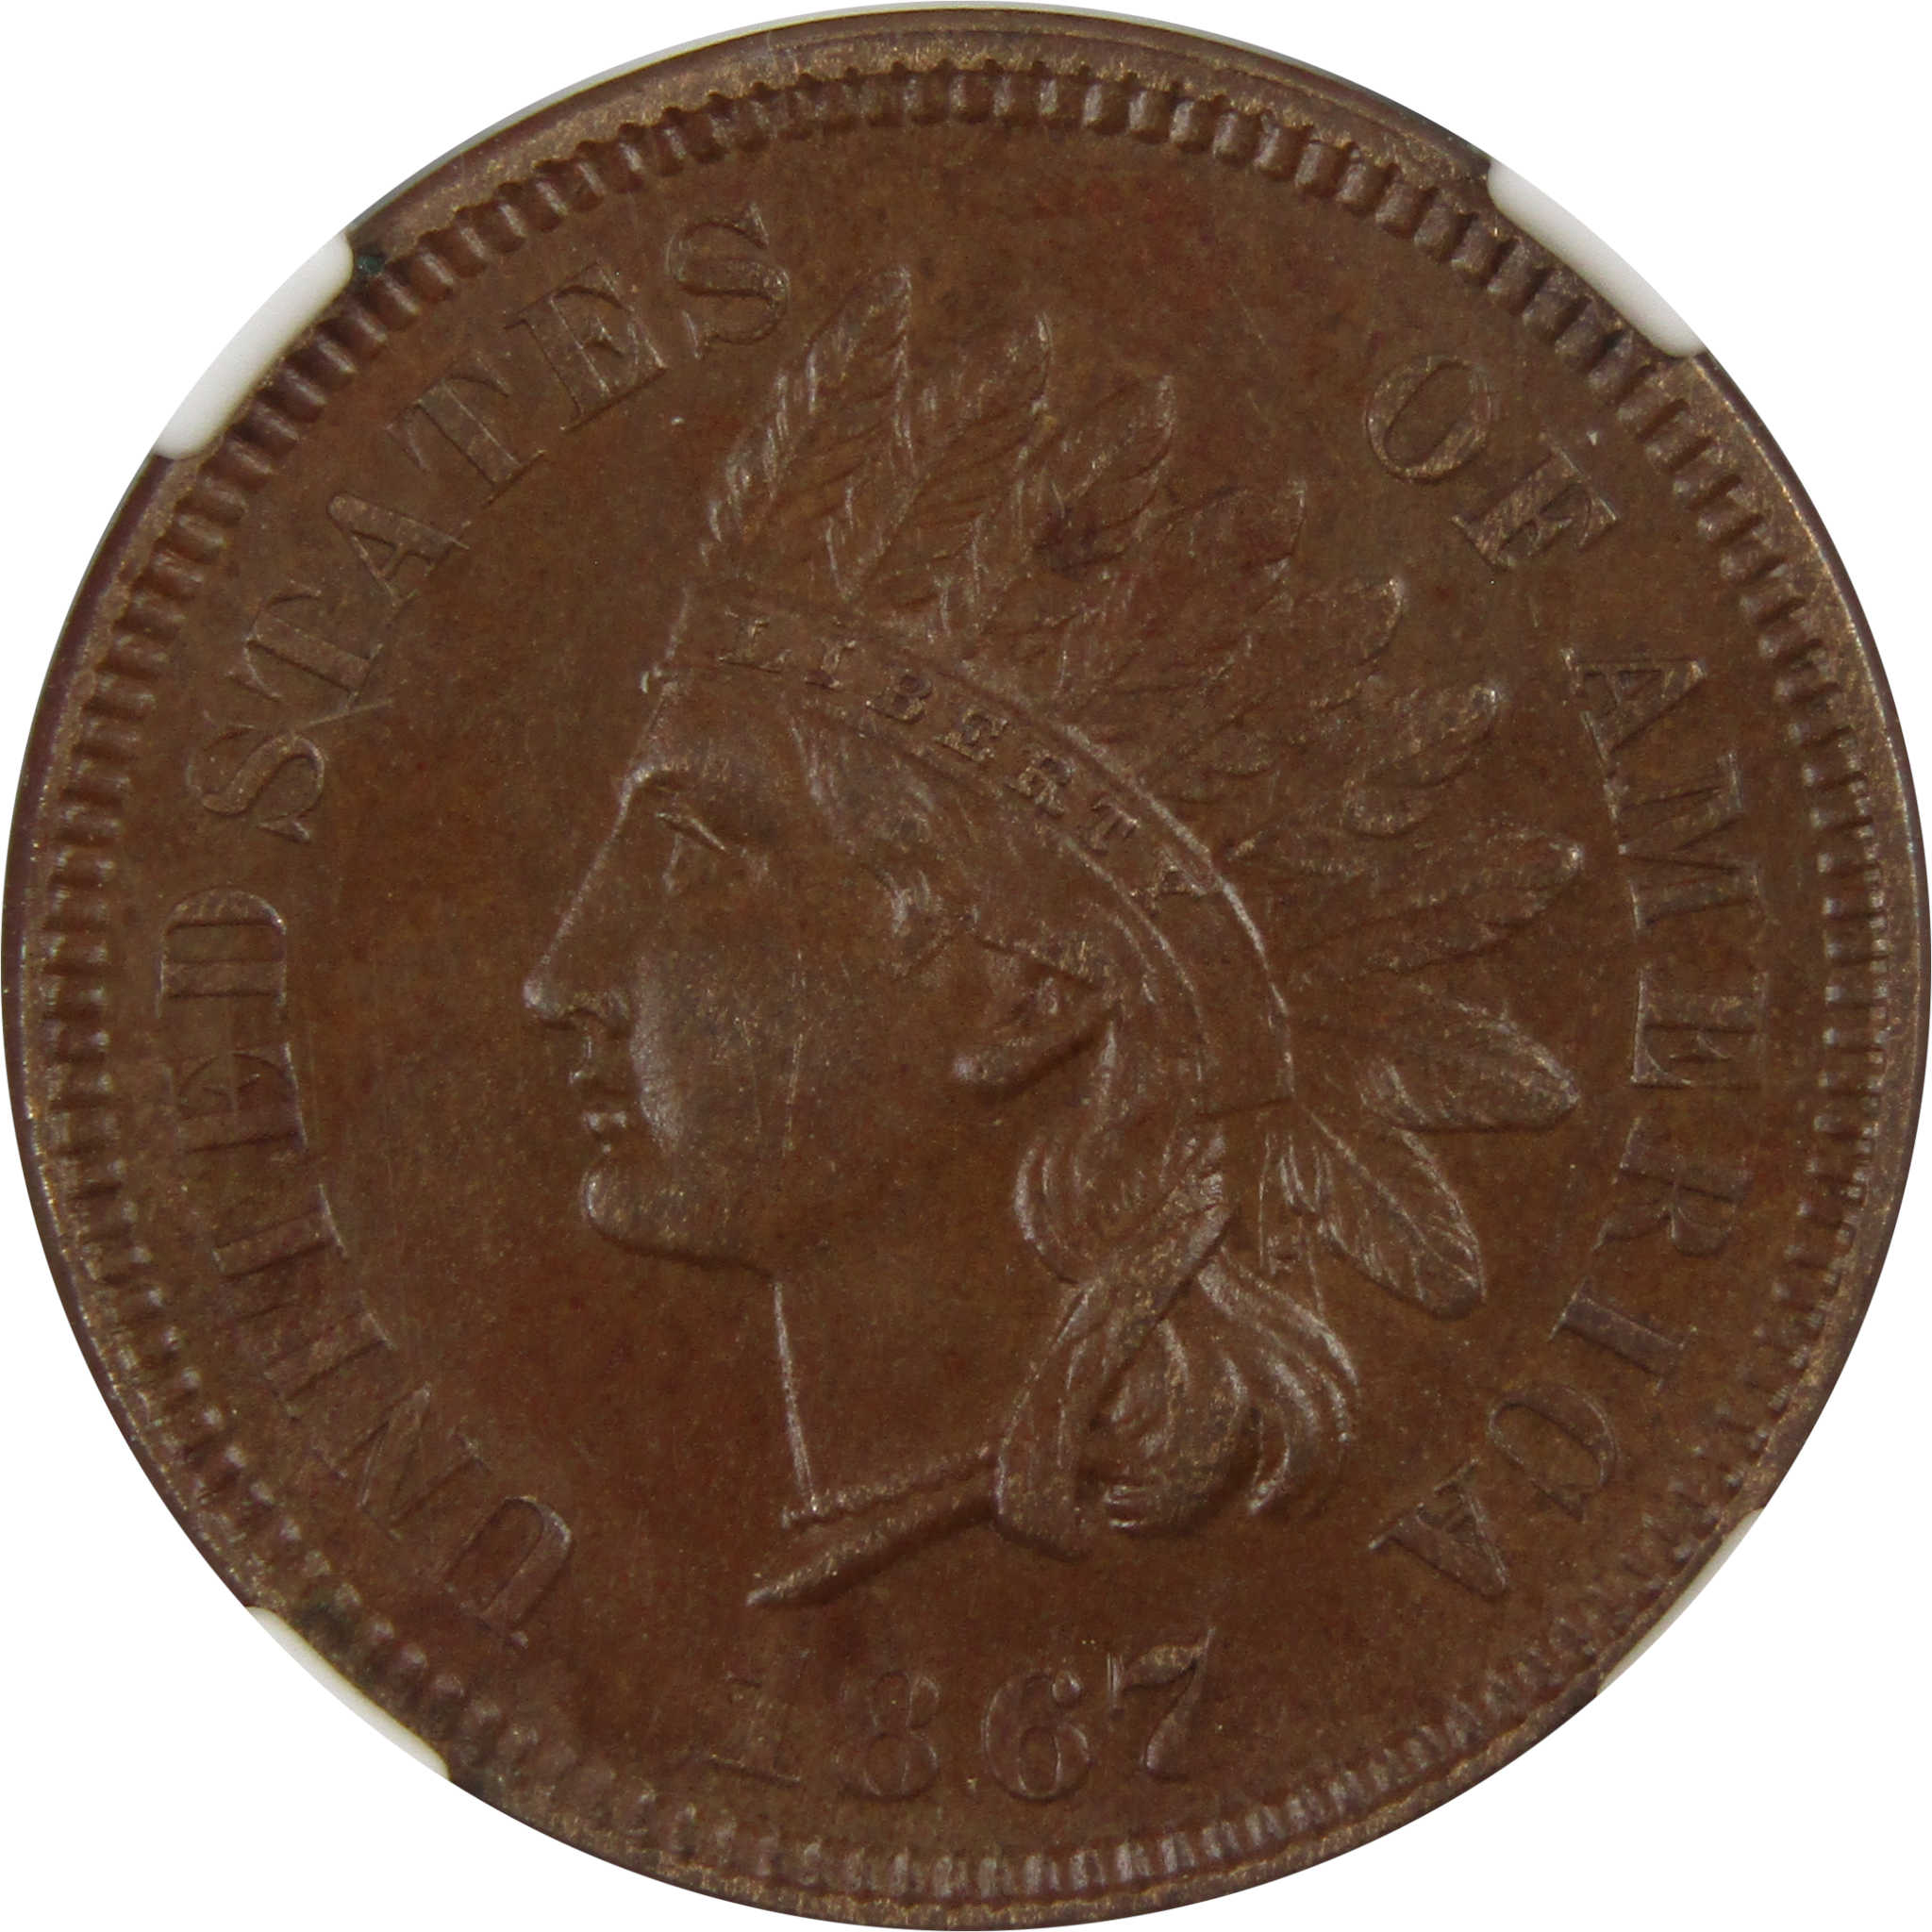 1867 Indian Head Cent AU 58 BN NGC Penny 1c Coin SKU:I7929